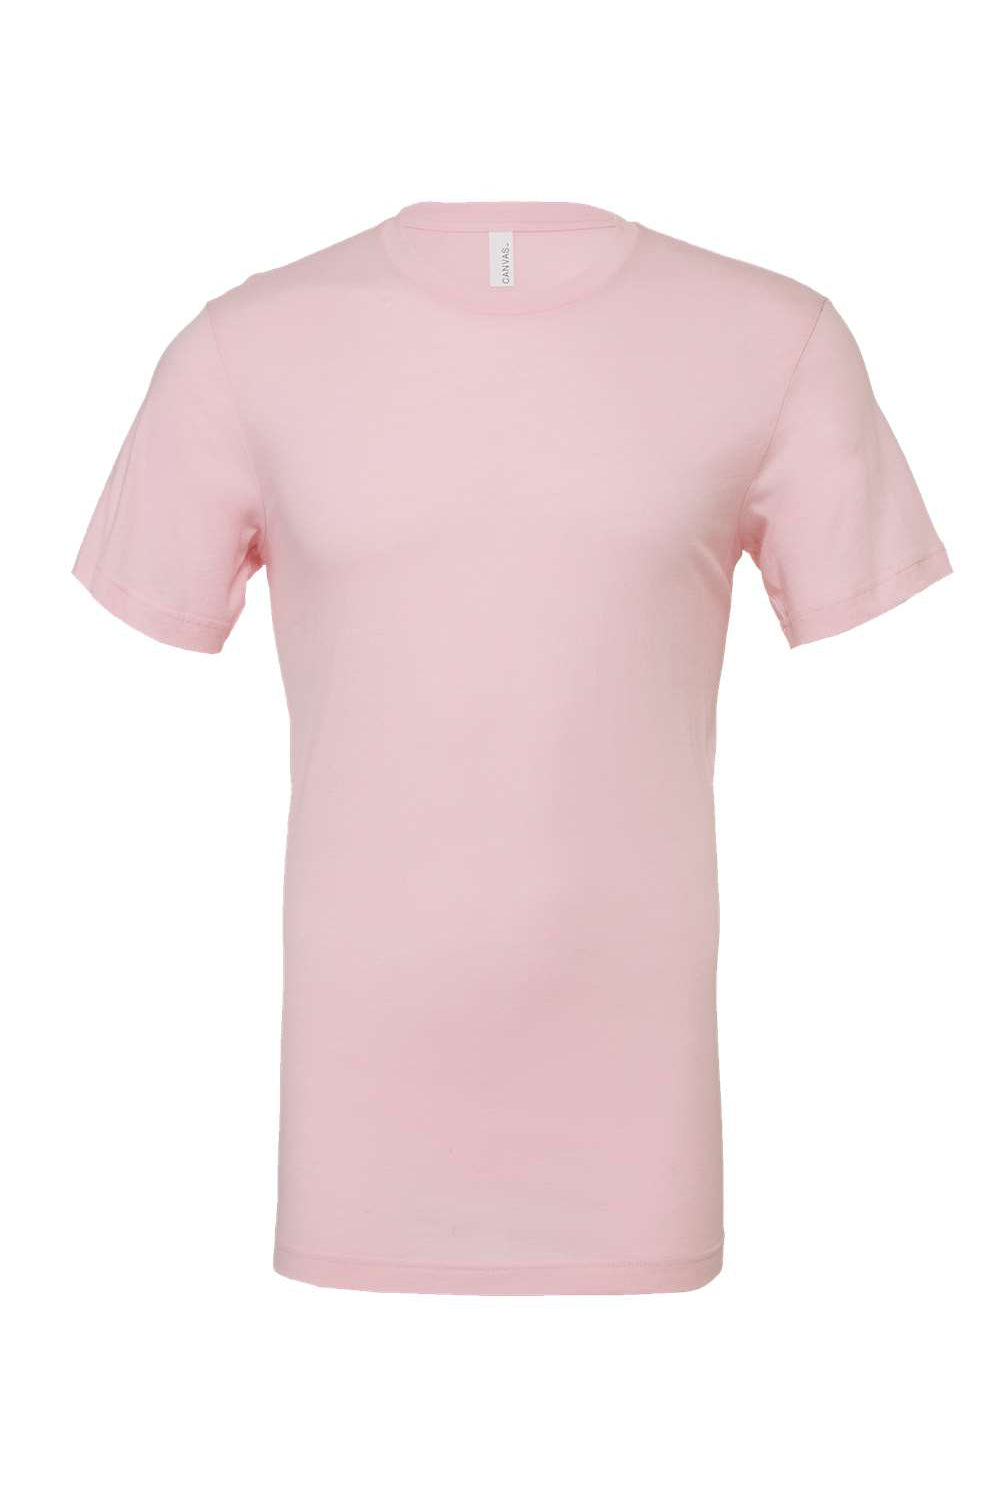 Bella + Canvas BC3001/3001C Mens Jersey Short Sleeve Crewneck T-Shirt Soft Pink Flat Front